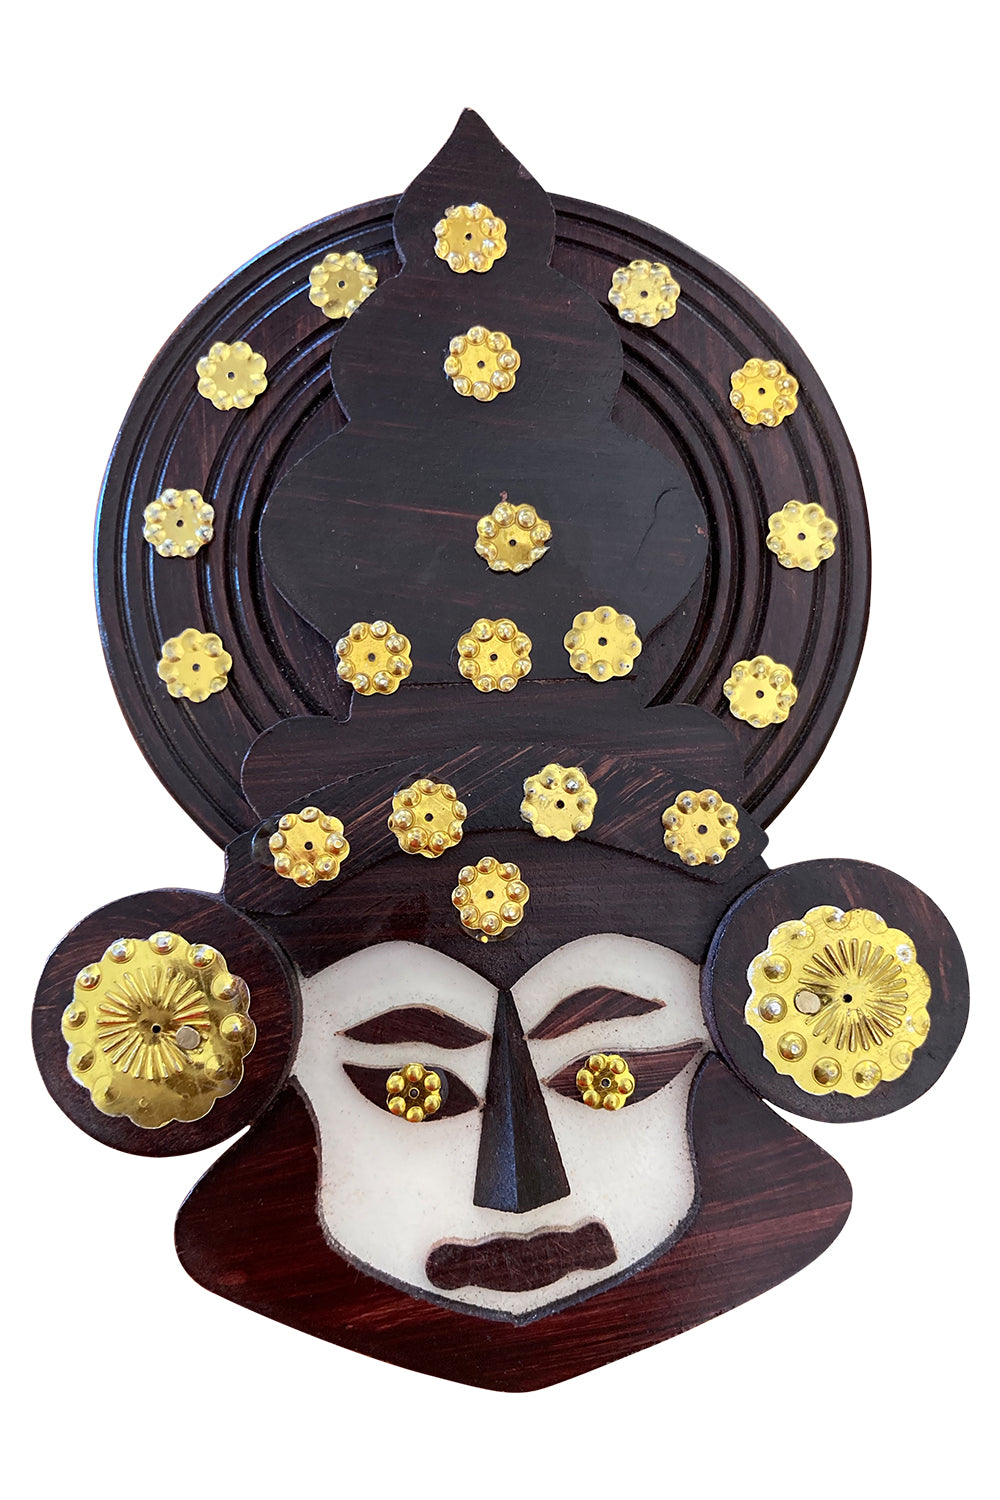 Southloom Handmade Kathakali Face Handicraft (Carved from Mahogany Wood)